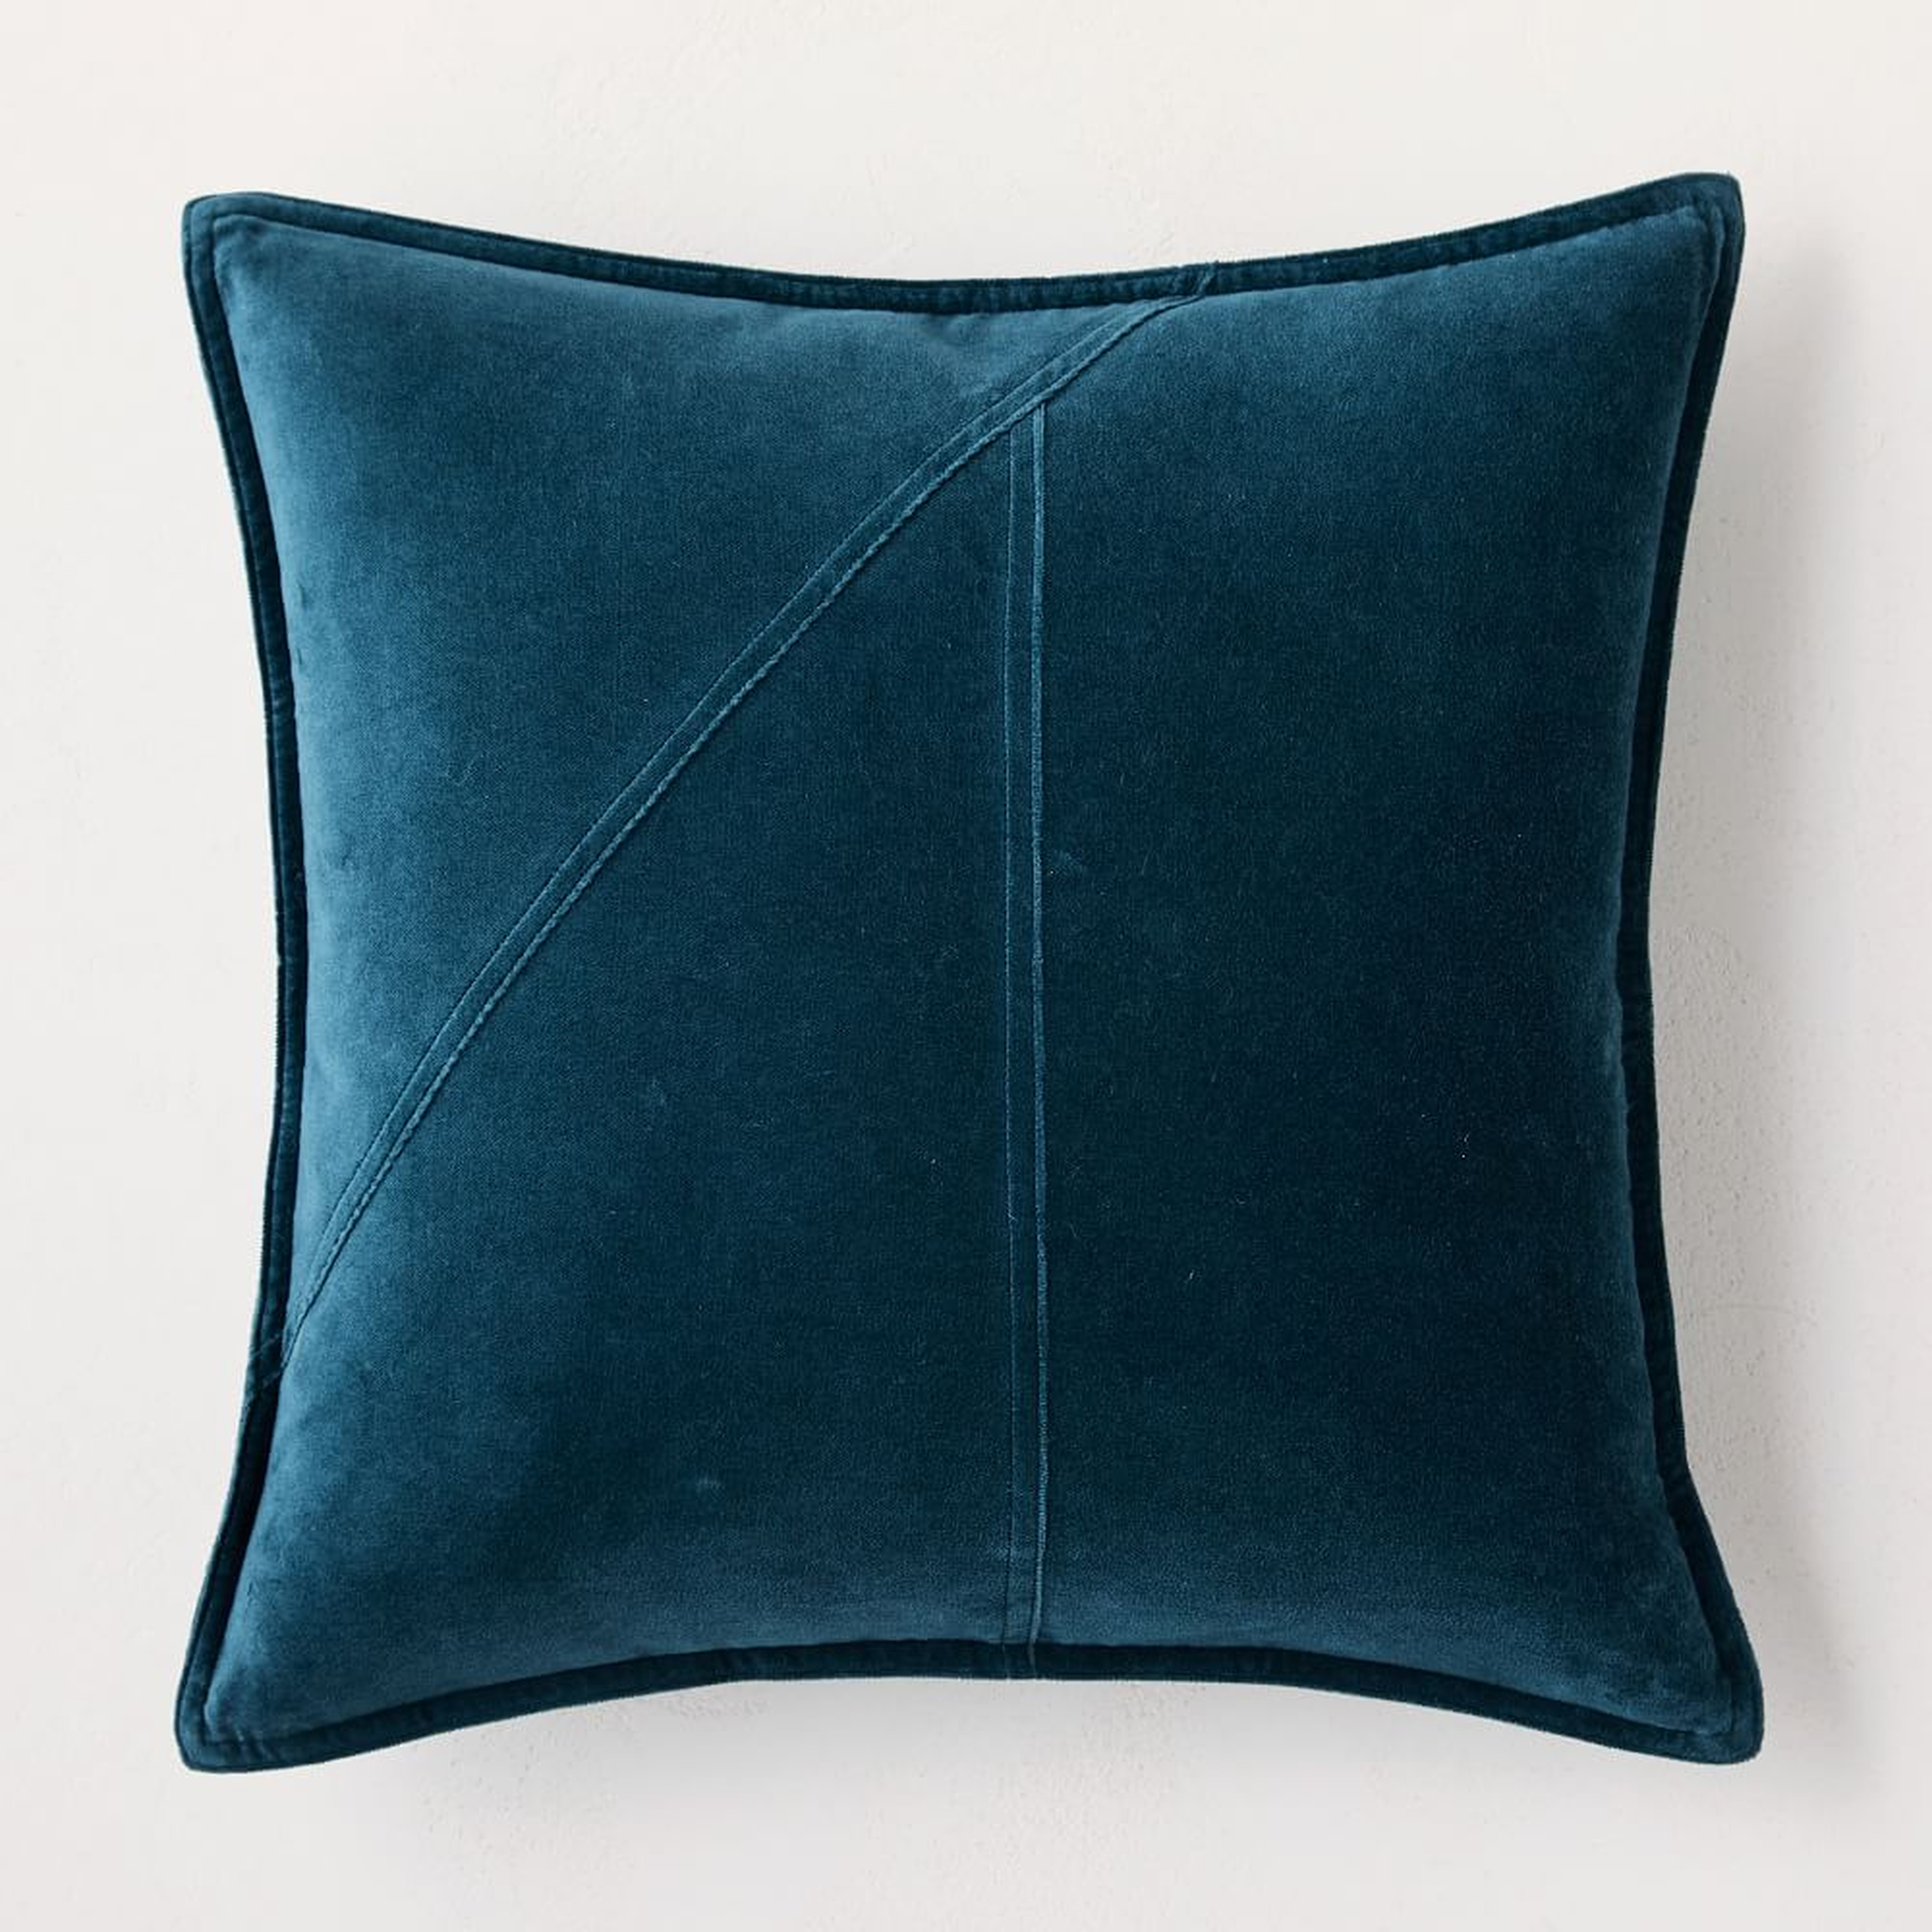 Washed Cotton Velvet Pillow Cover, 18"x18", Teal Blue - West Elm